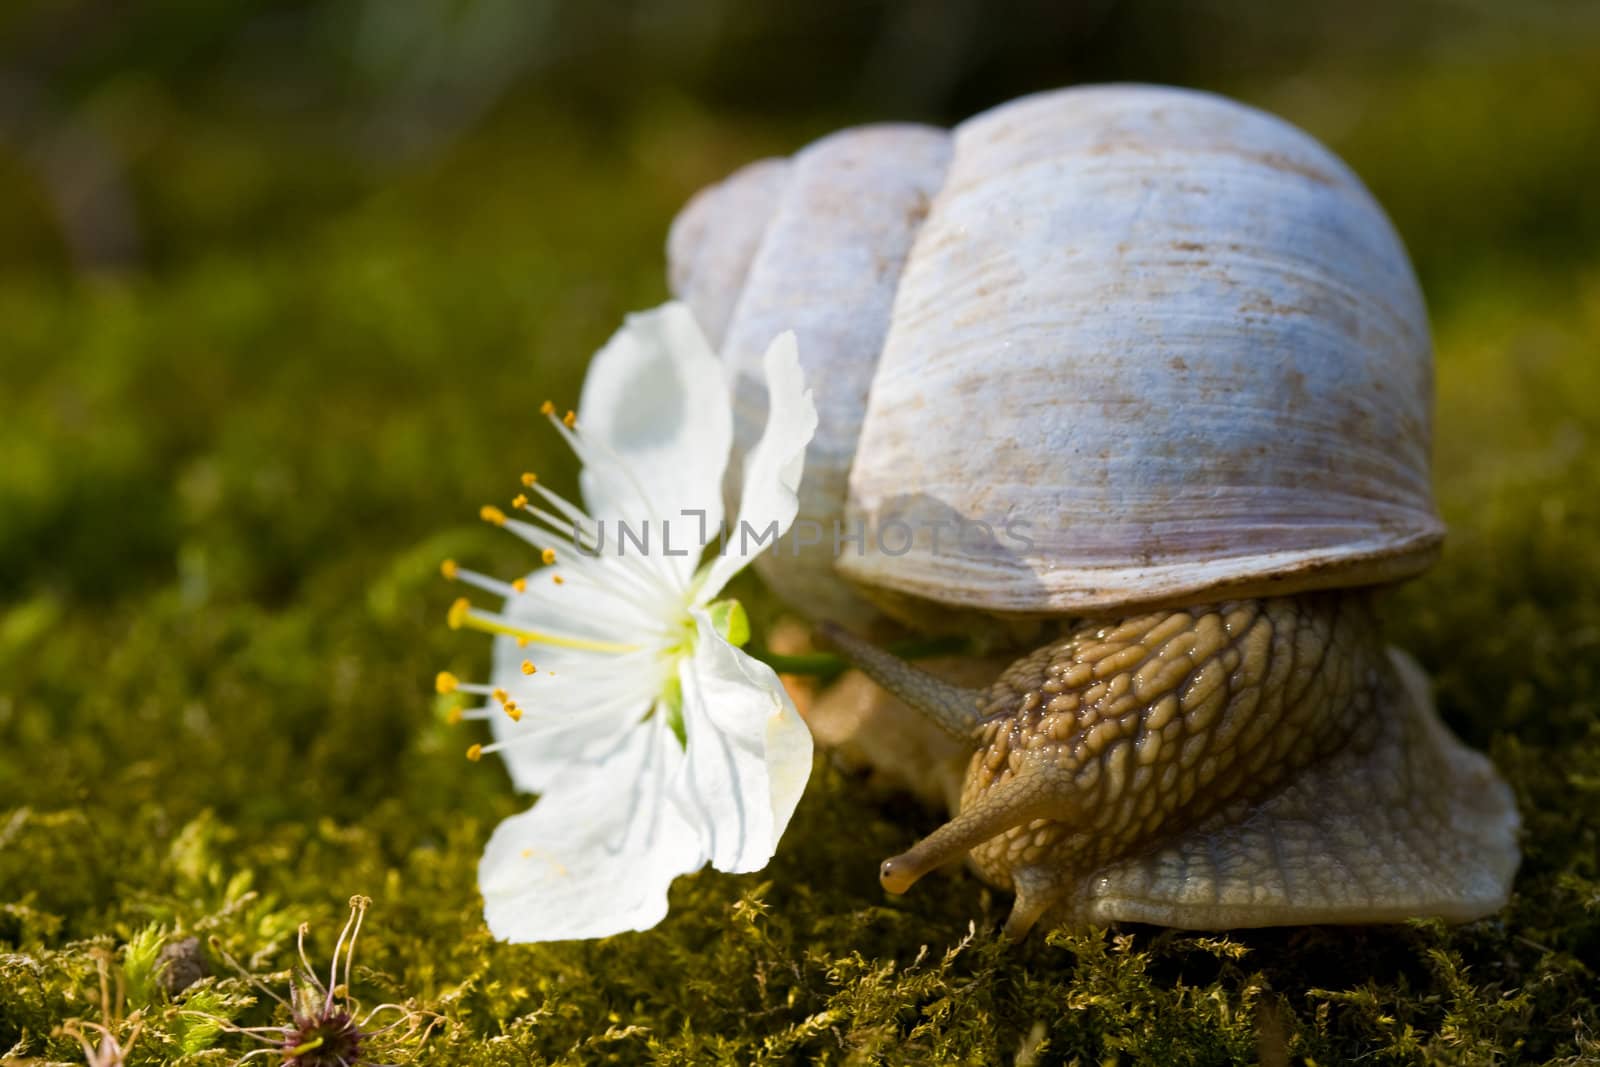 Snail smelling the flower by seawhisper